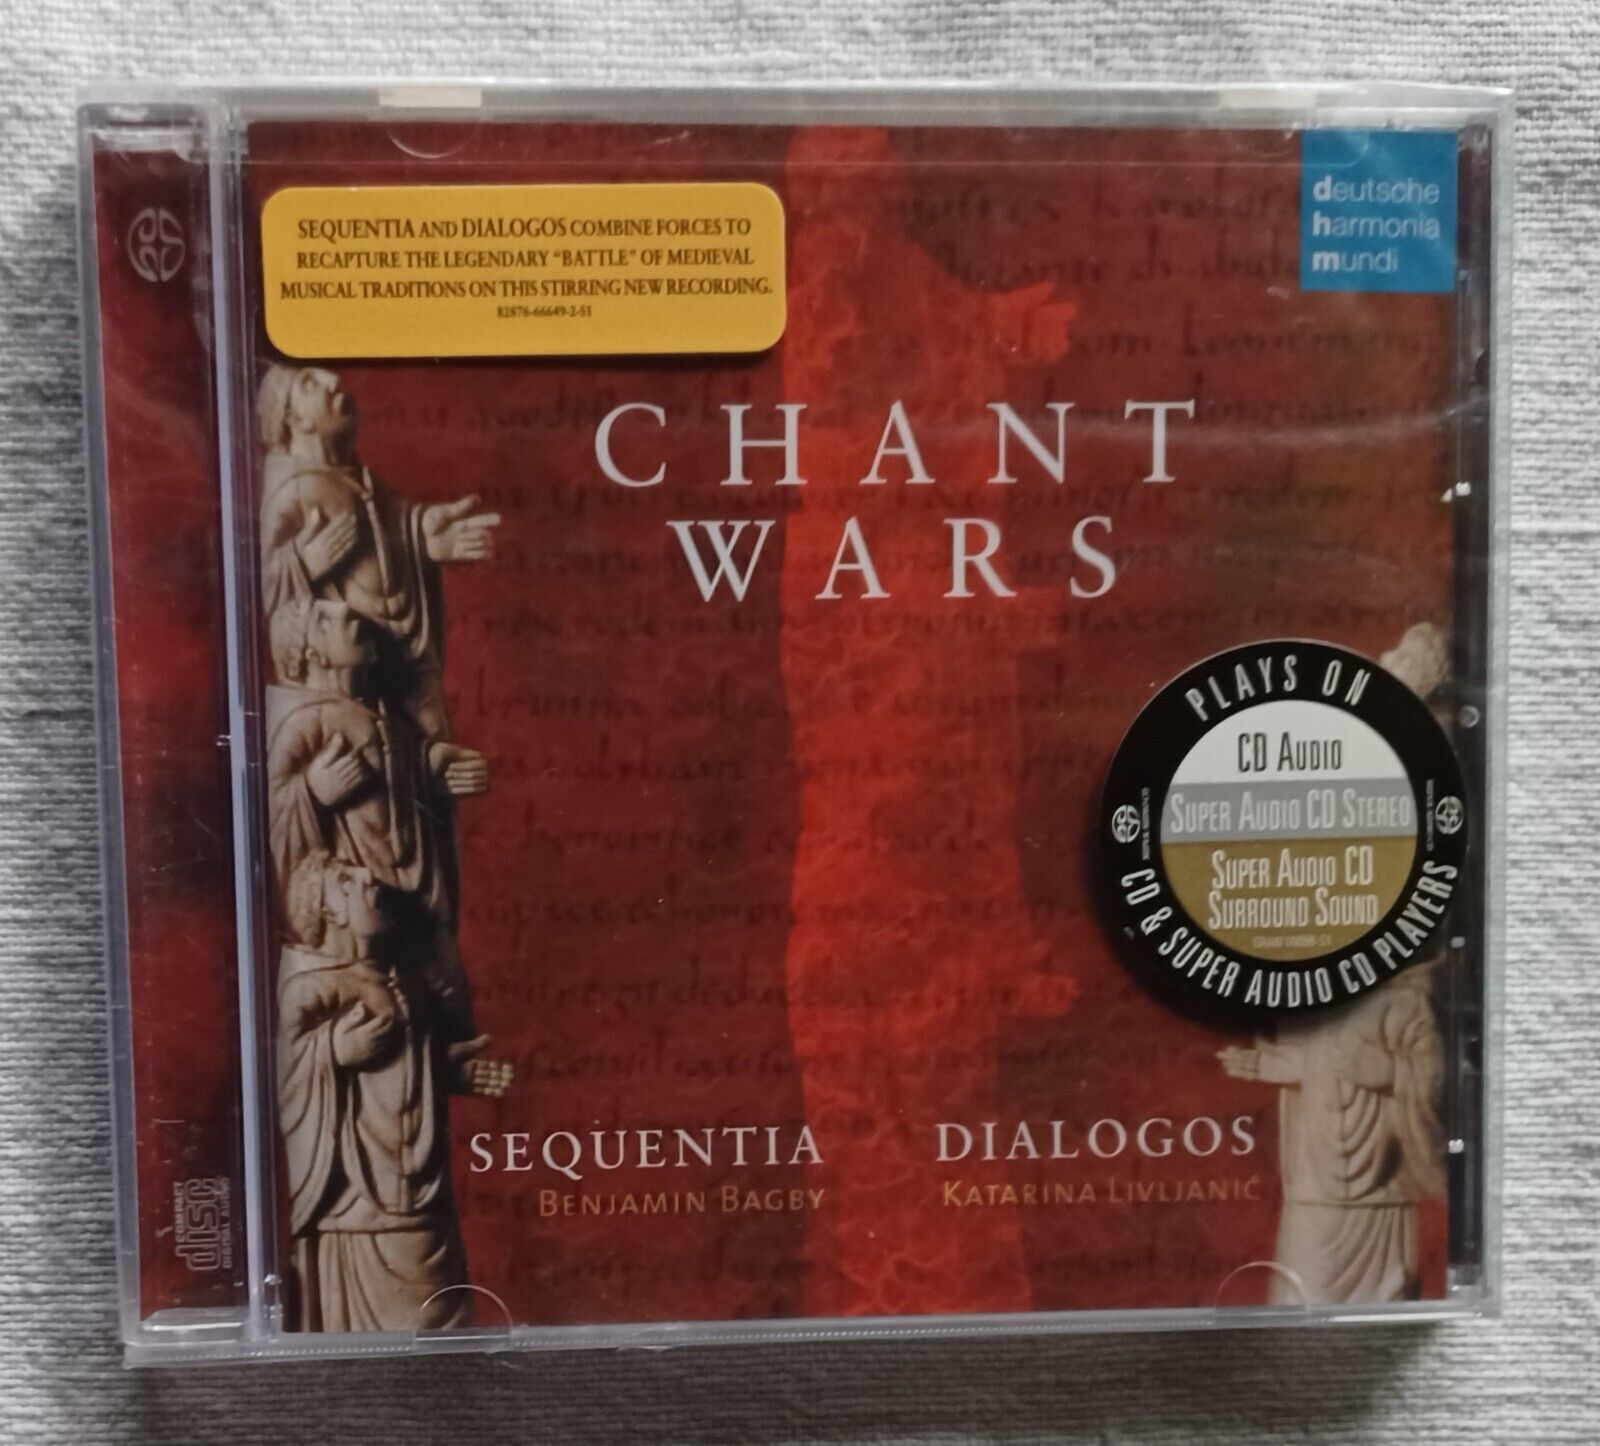 Chant Wars Sequentia Dialogos CD  2005 Sony  Deutsche Harmonia Mundi  NEW Sealed